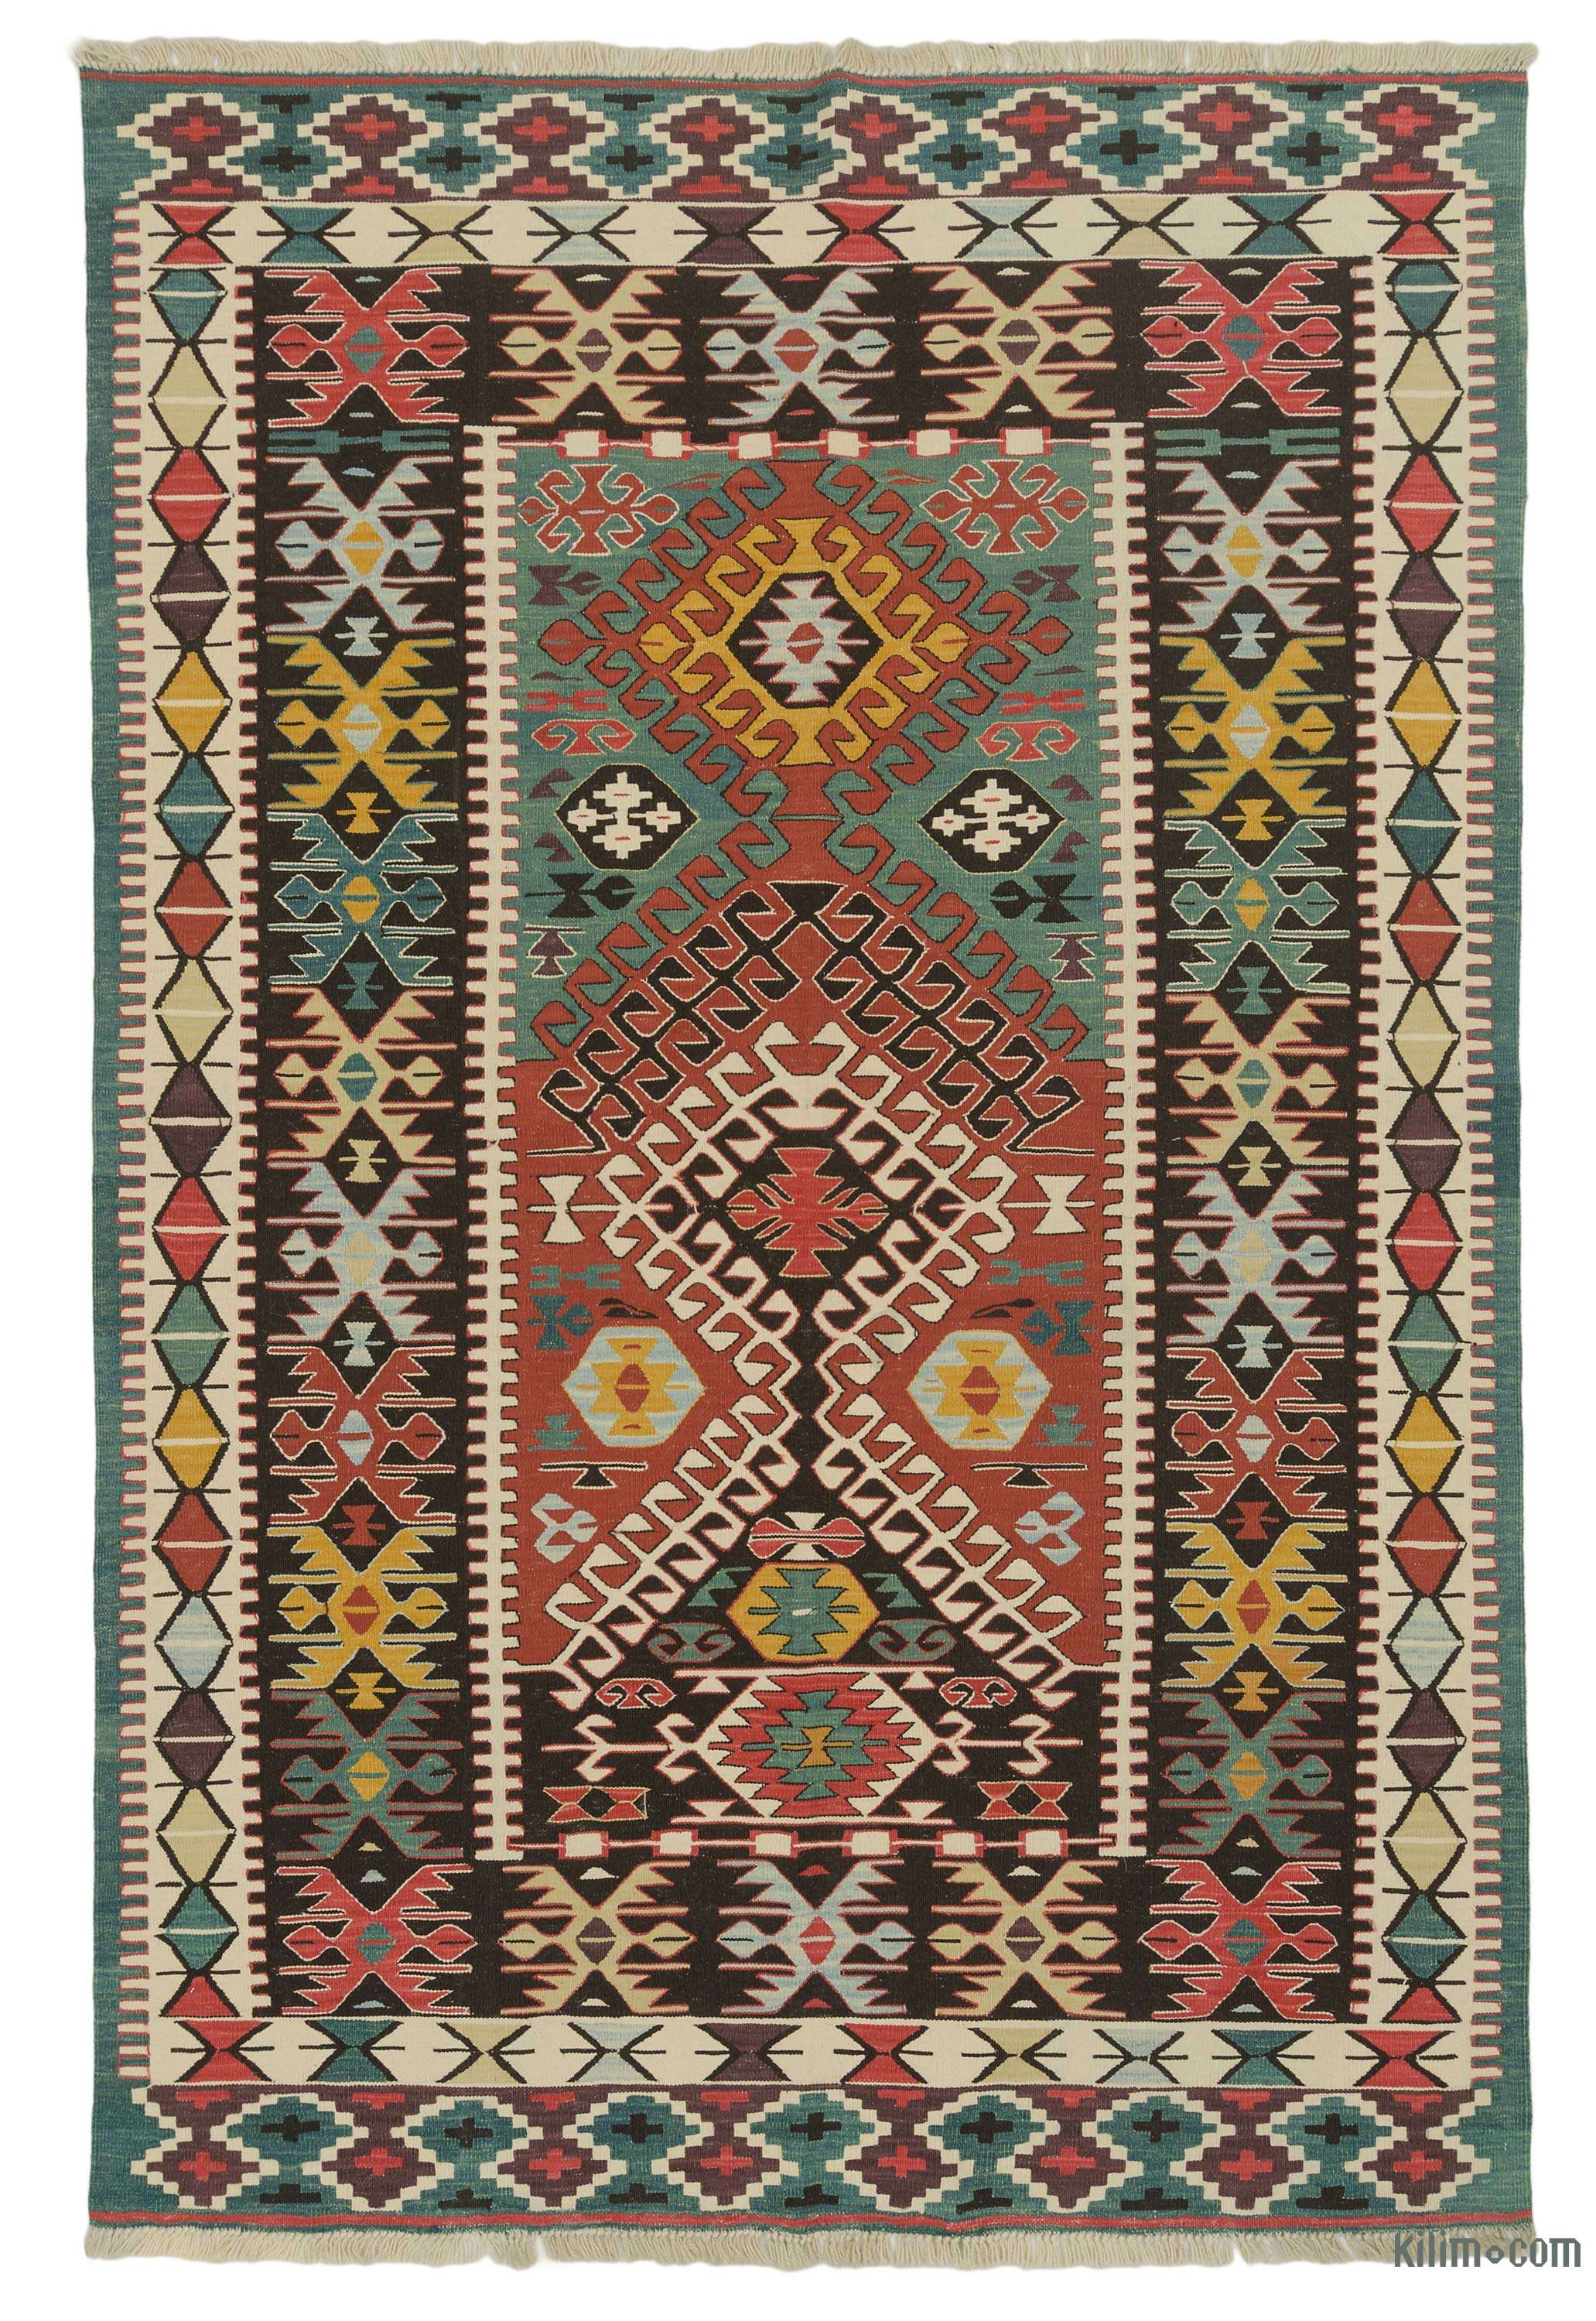 Multicolor New Handwoven Turkish Kilim Rug - 6' x 8' 11 (72 x 107)